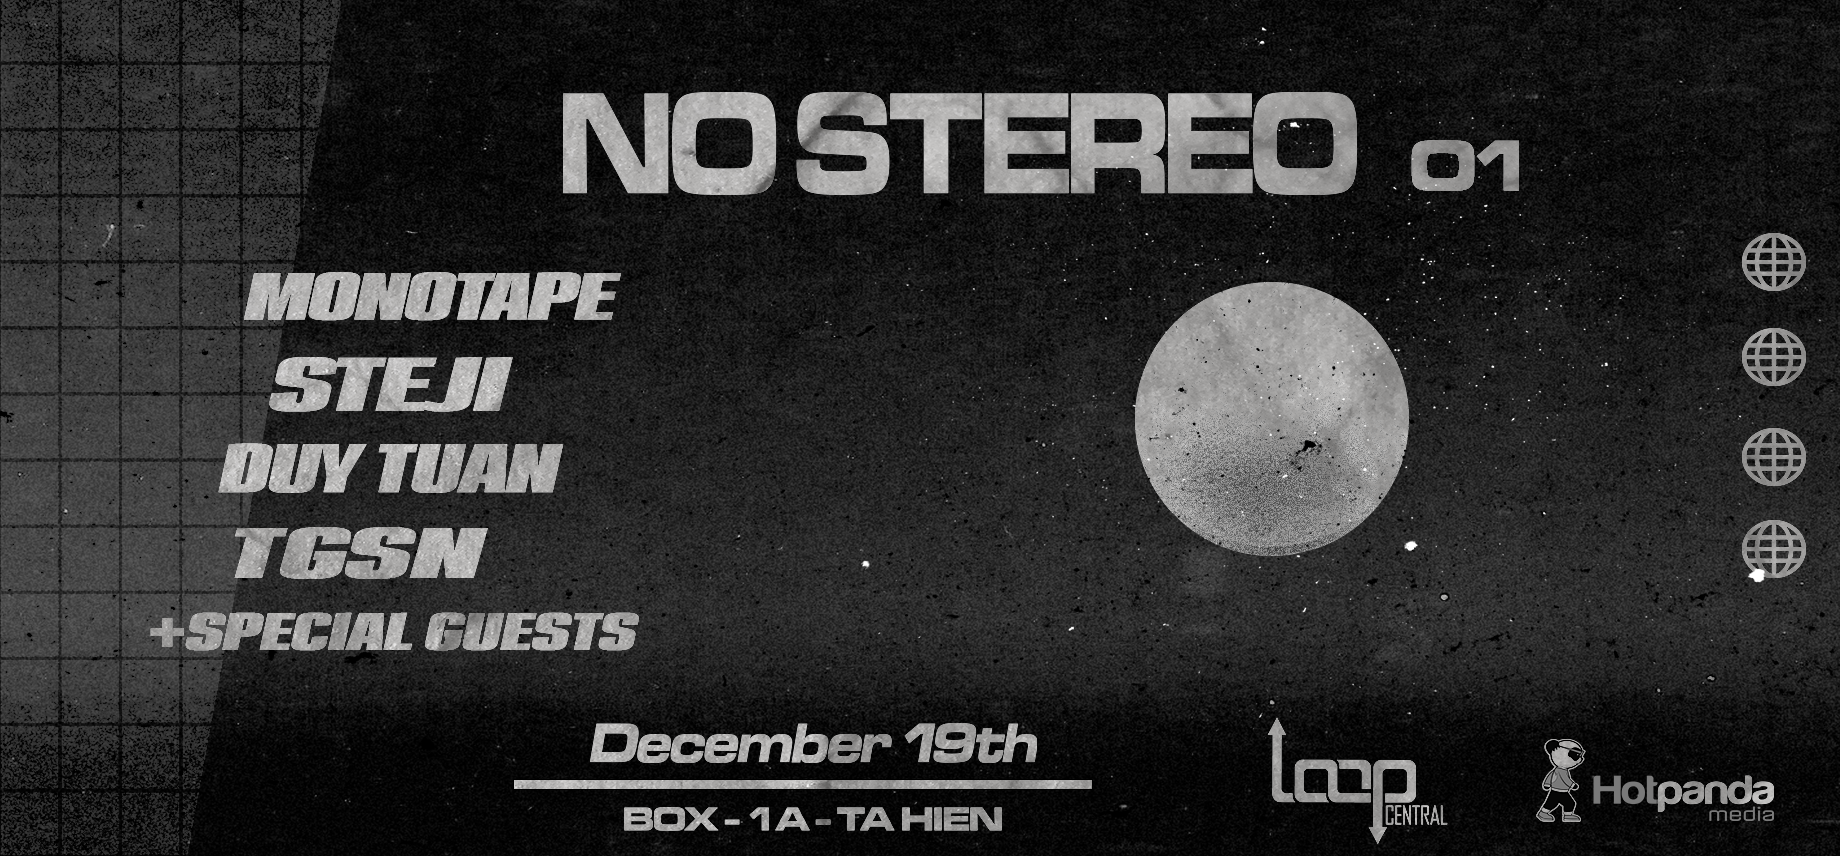 No Stereo 01 | Thursday, December 19th [Event Hanoi]